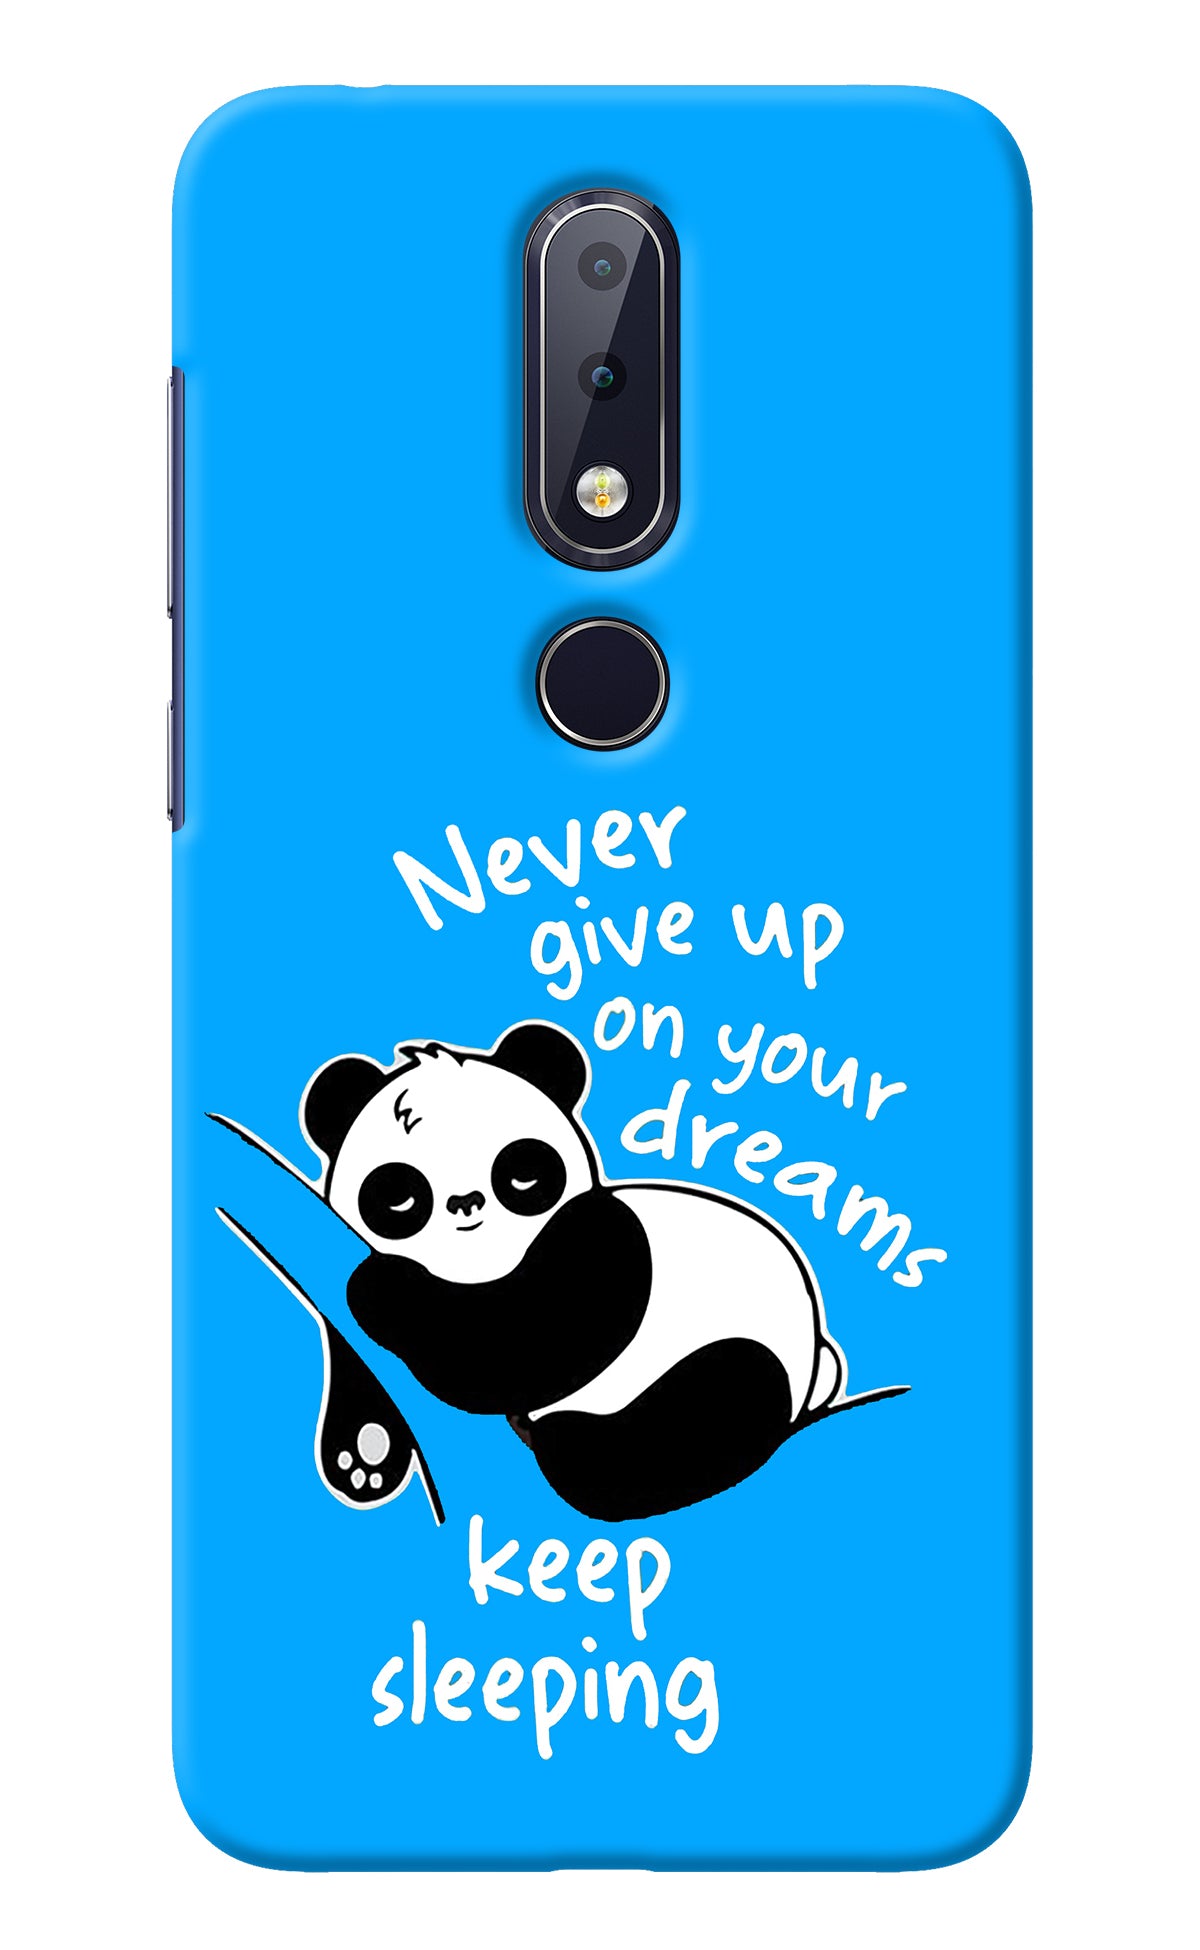 Keep Sleeping Nokia 6.1 plus Back Cover